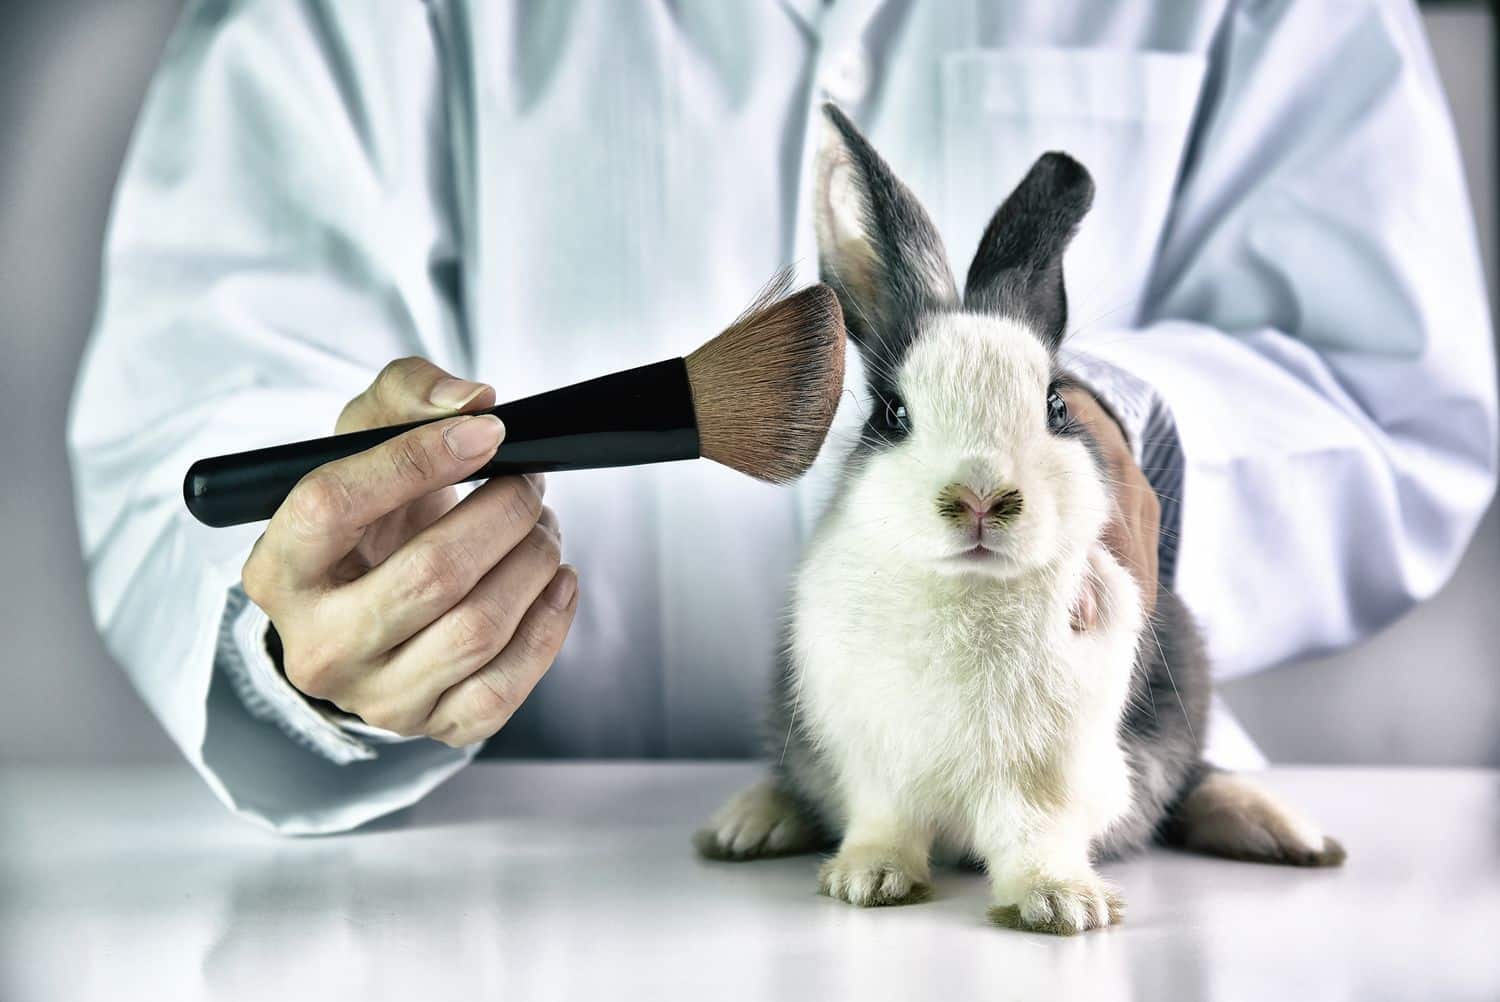 Why Do Companies Use Animal Testing?